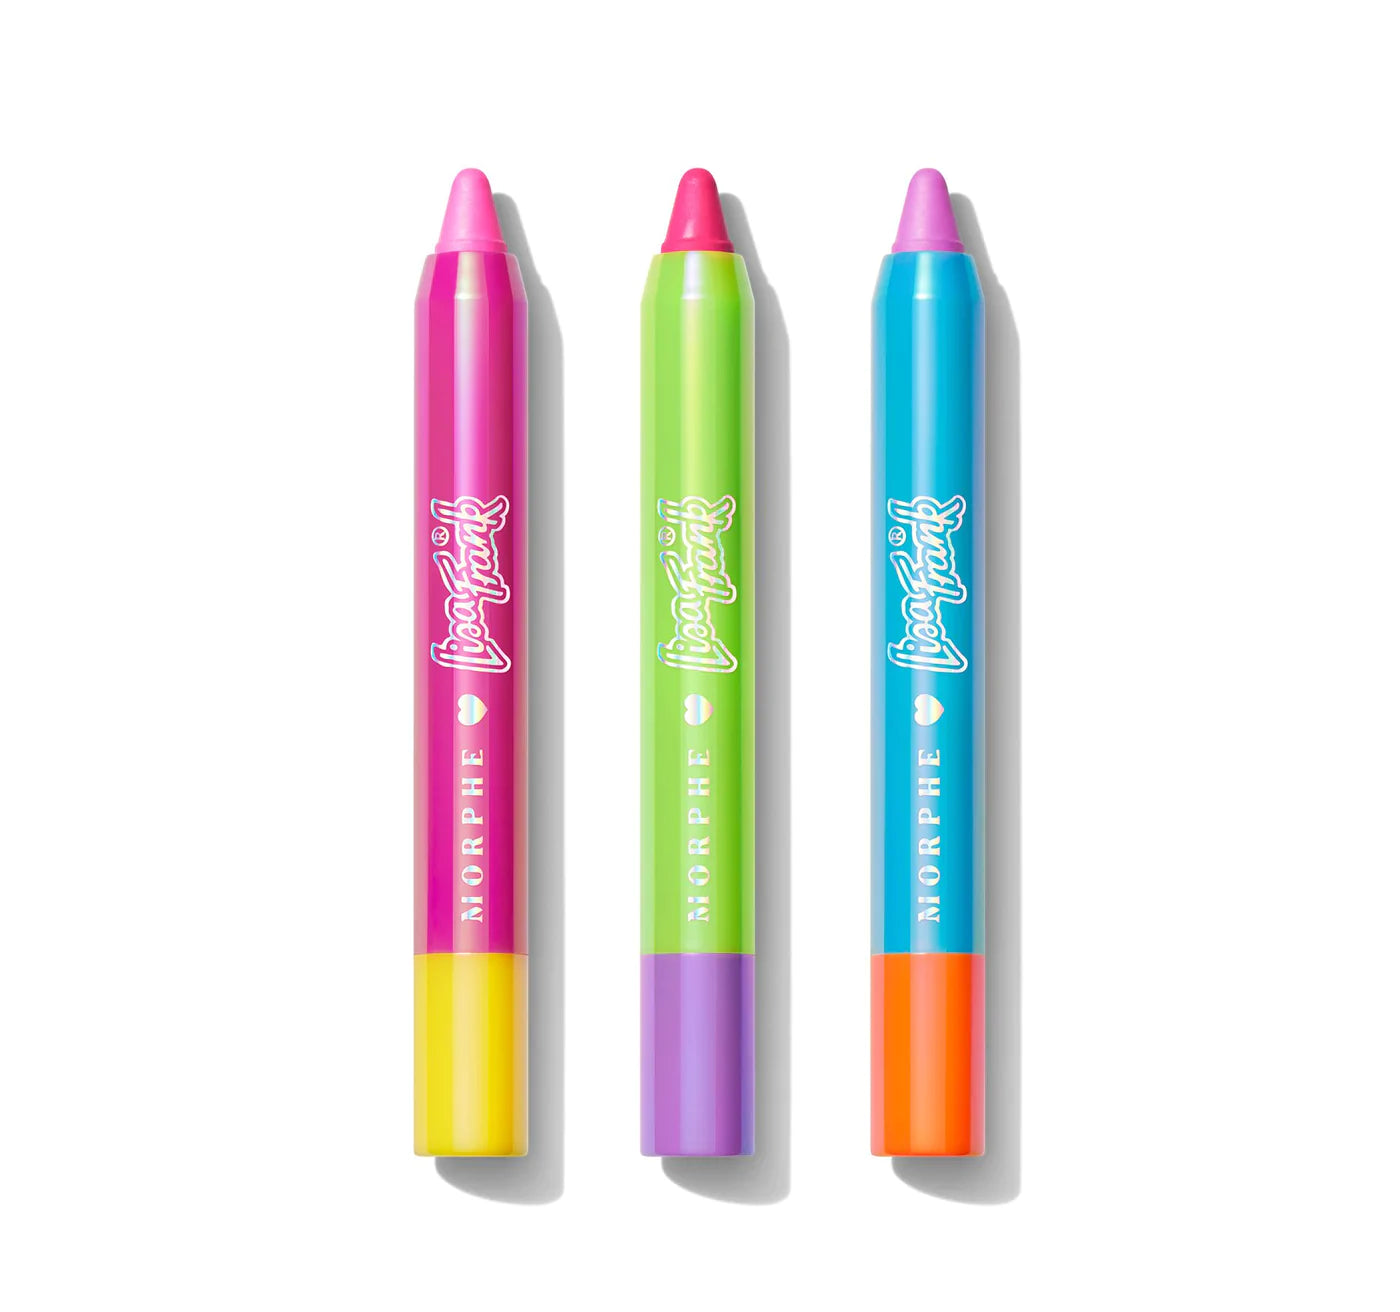 Morphe X Lisa Frank Paint It Playful Lip Crayon Trio